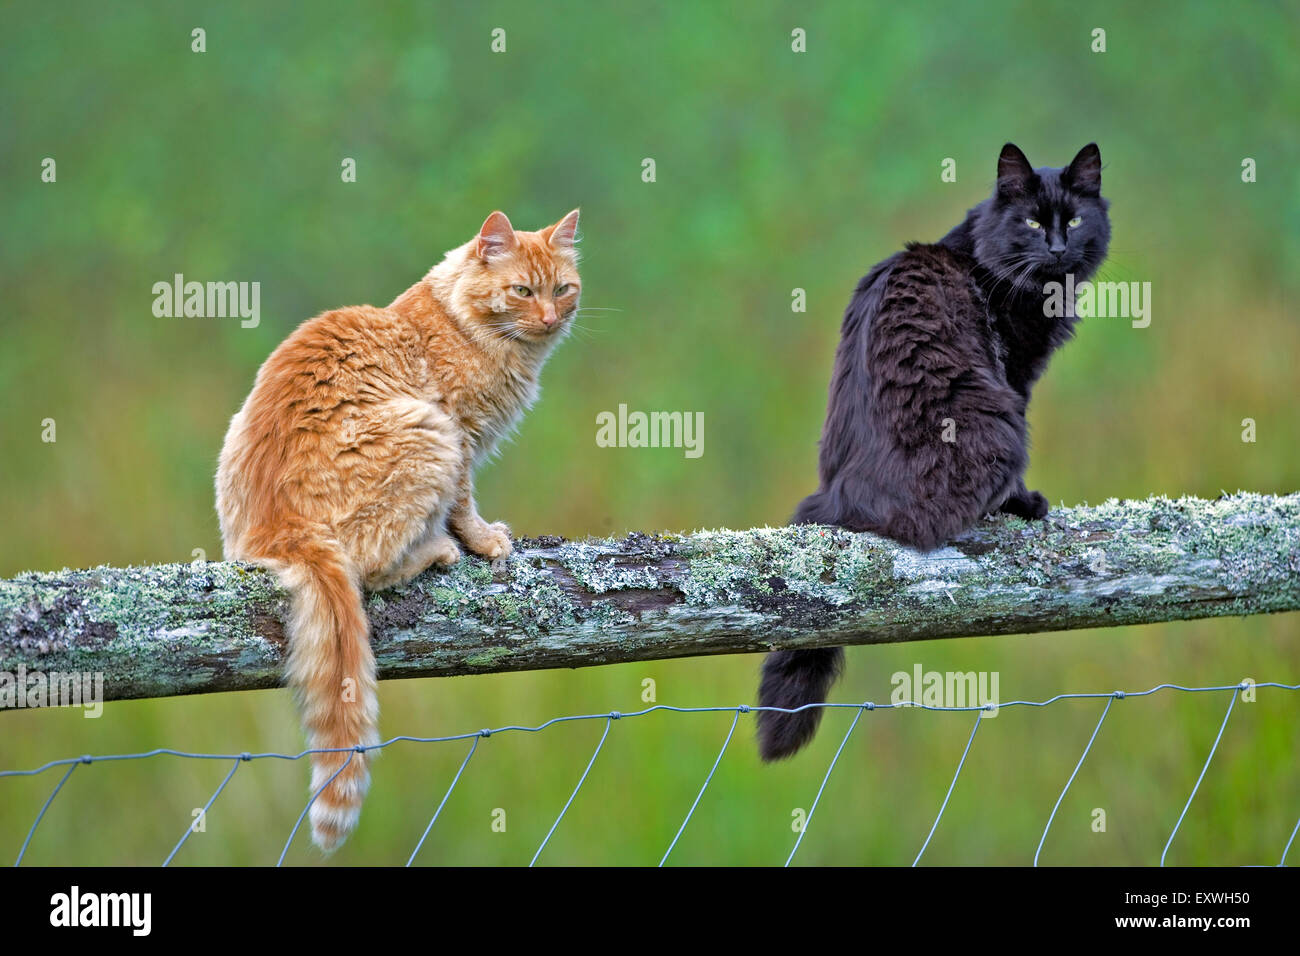 32,327 Two Black Cat Images, Stock Photos, 3D objects, & Vectors